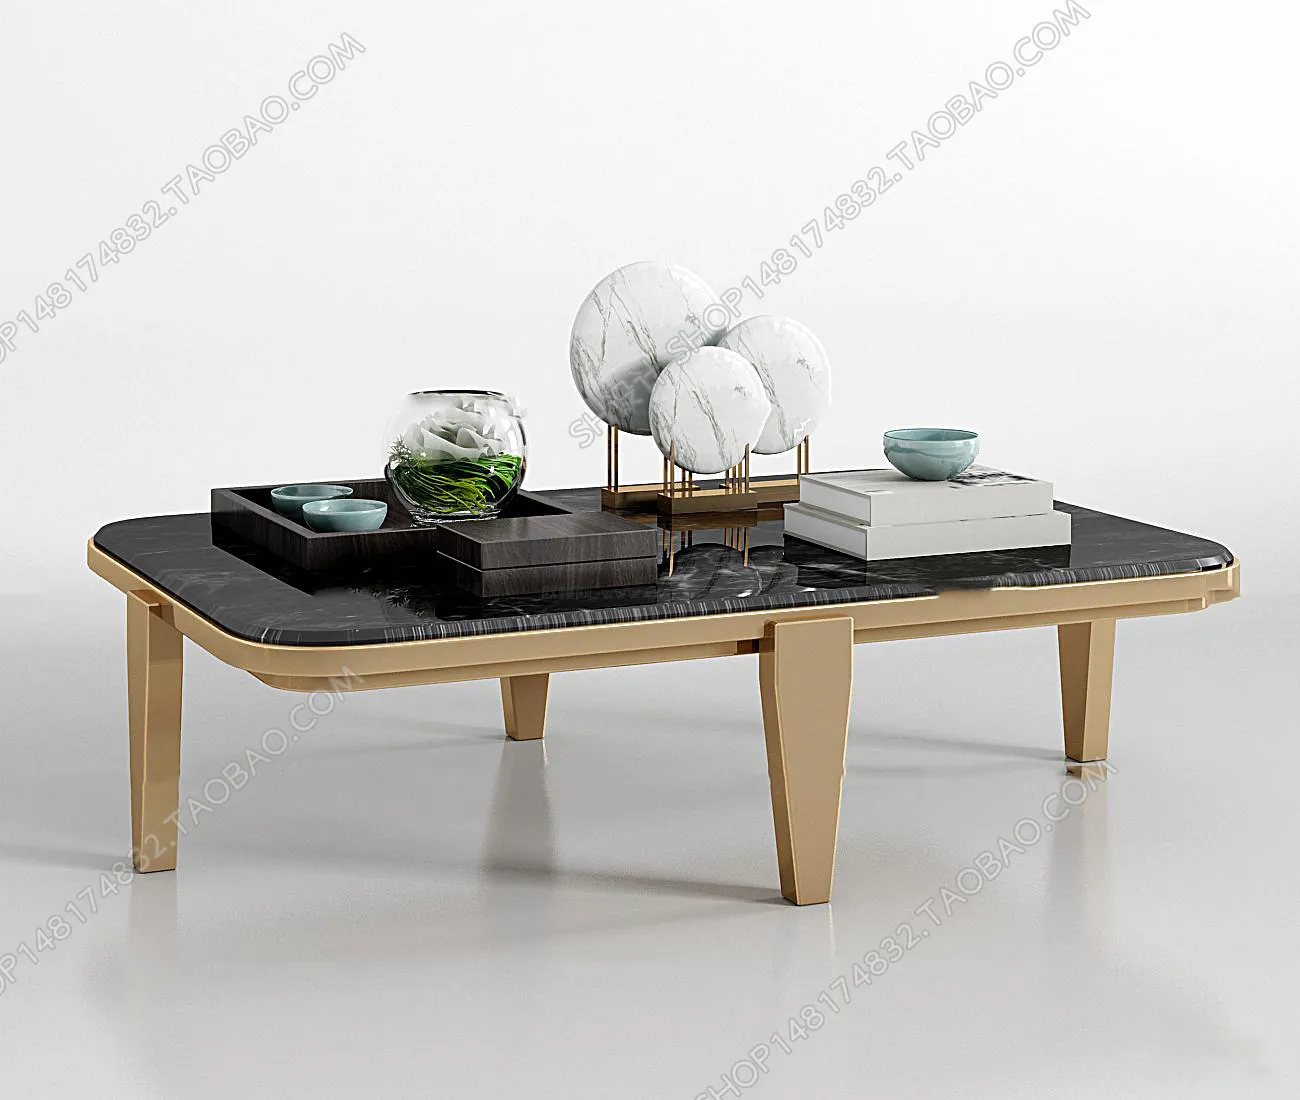 3DSKY MODELS – COFFEE TABLE 3D MODELS – 034